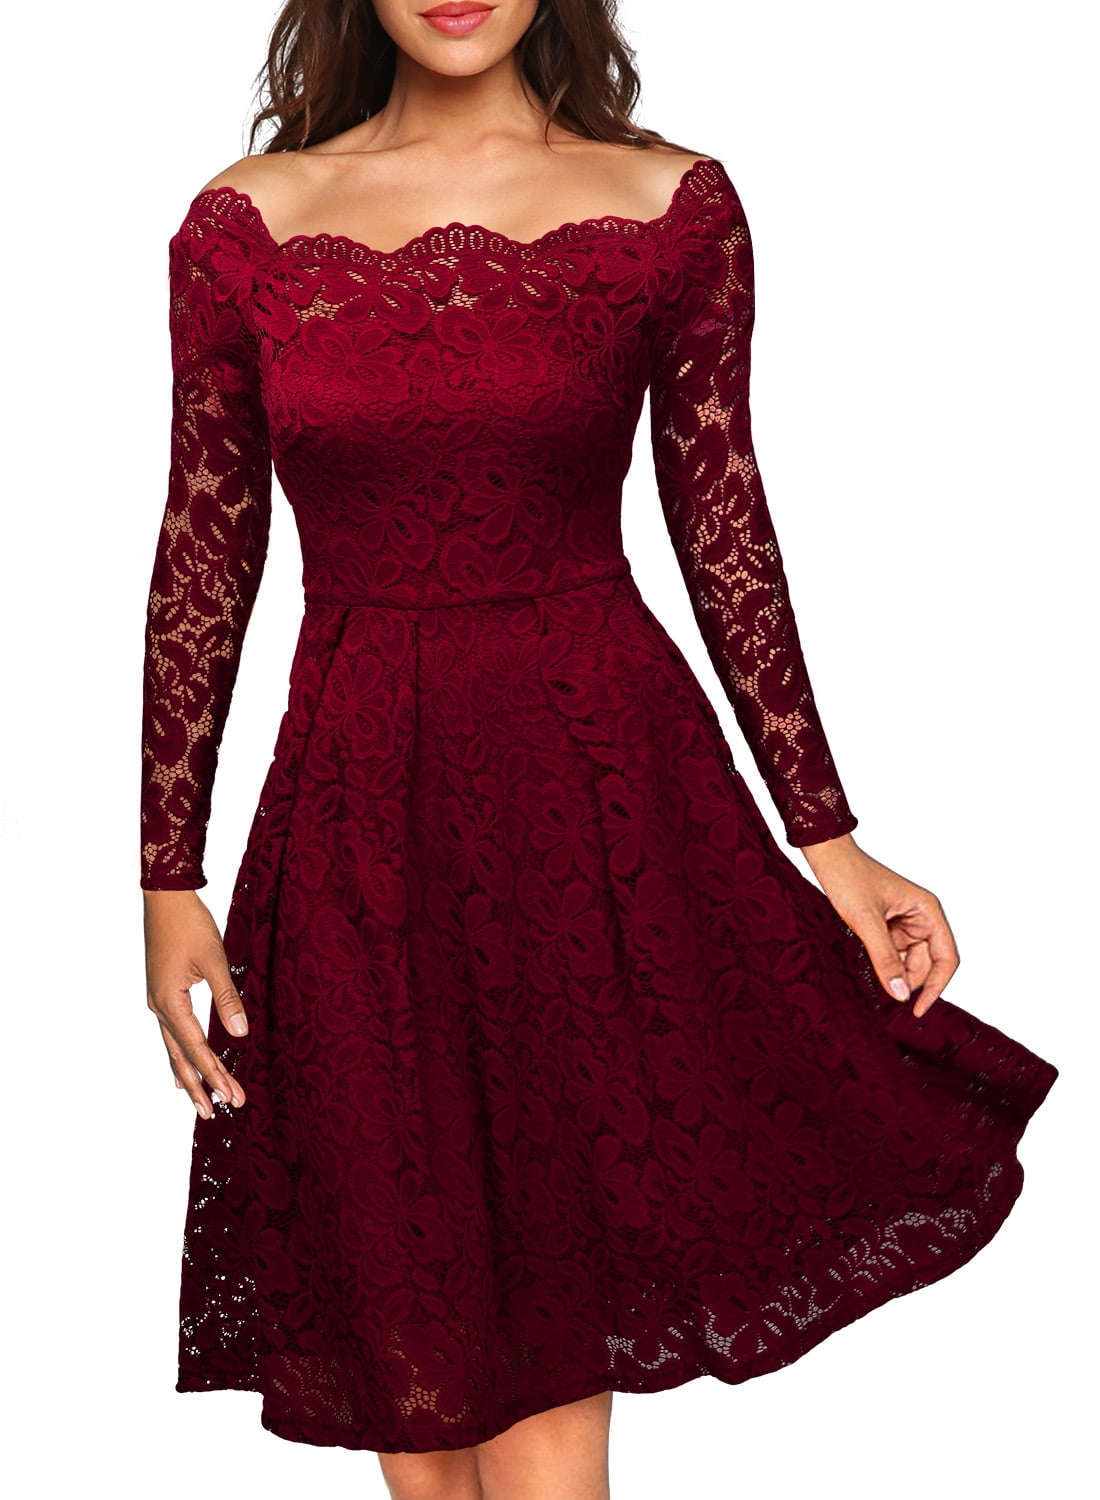 miusol red dress